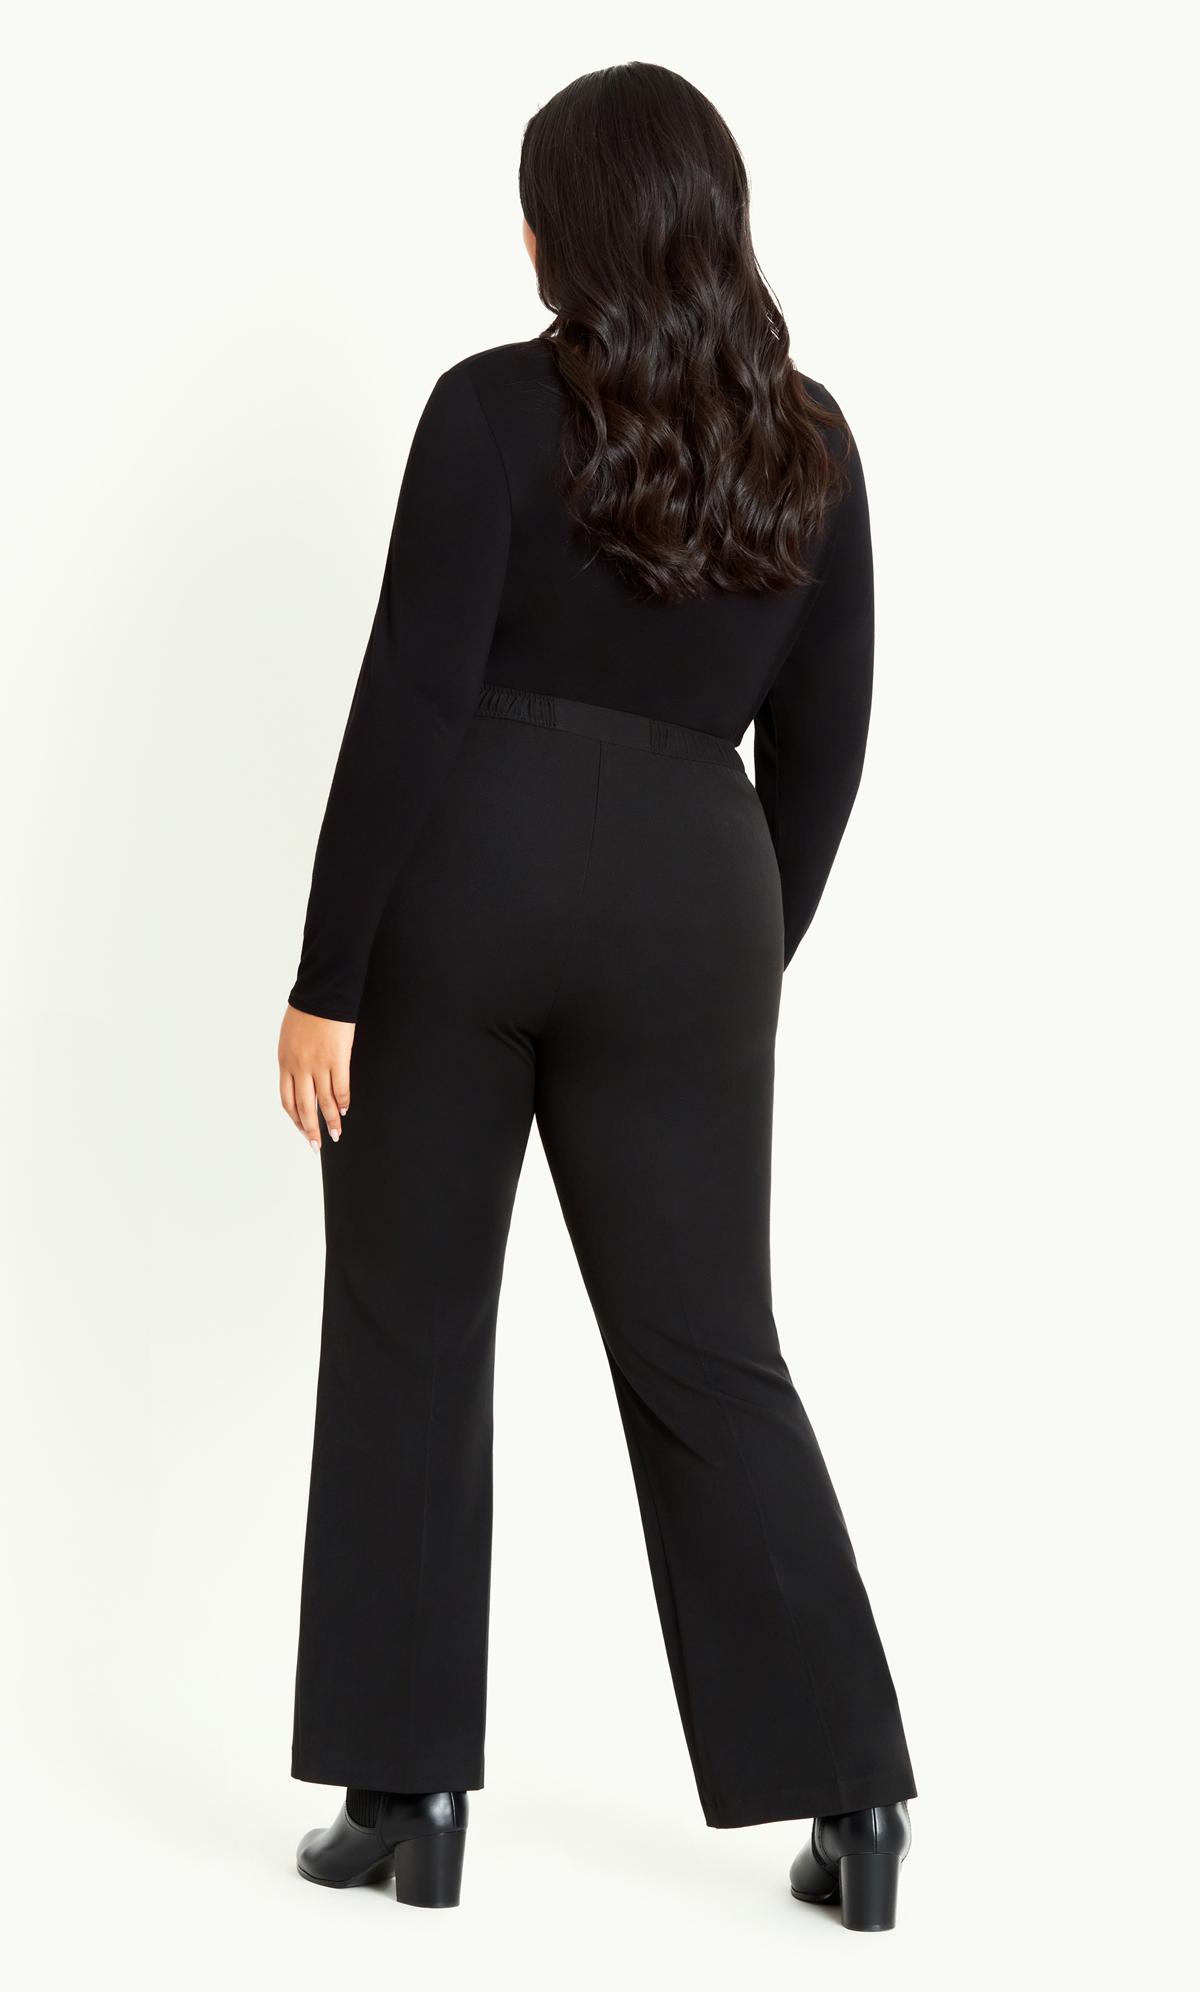 Picasso Black Curve Fit Bootcut Trouser Regular Length 2